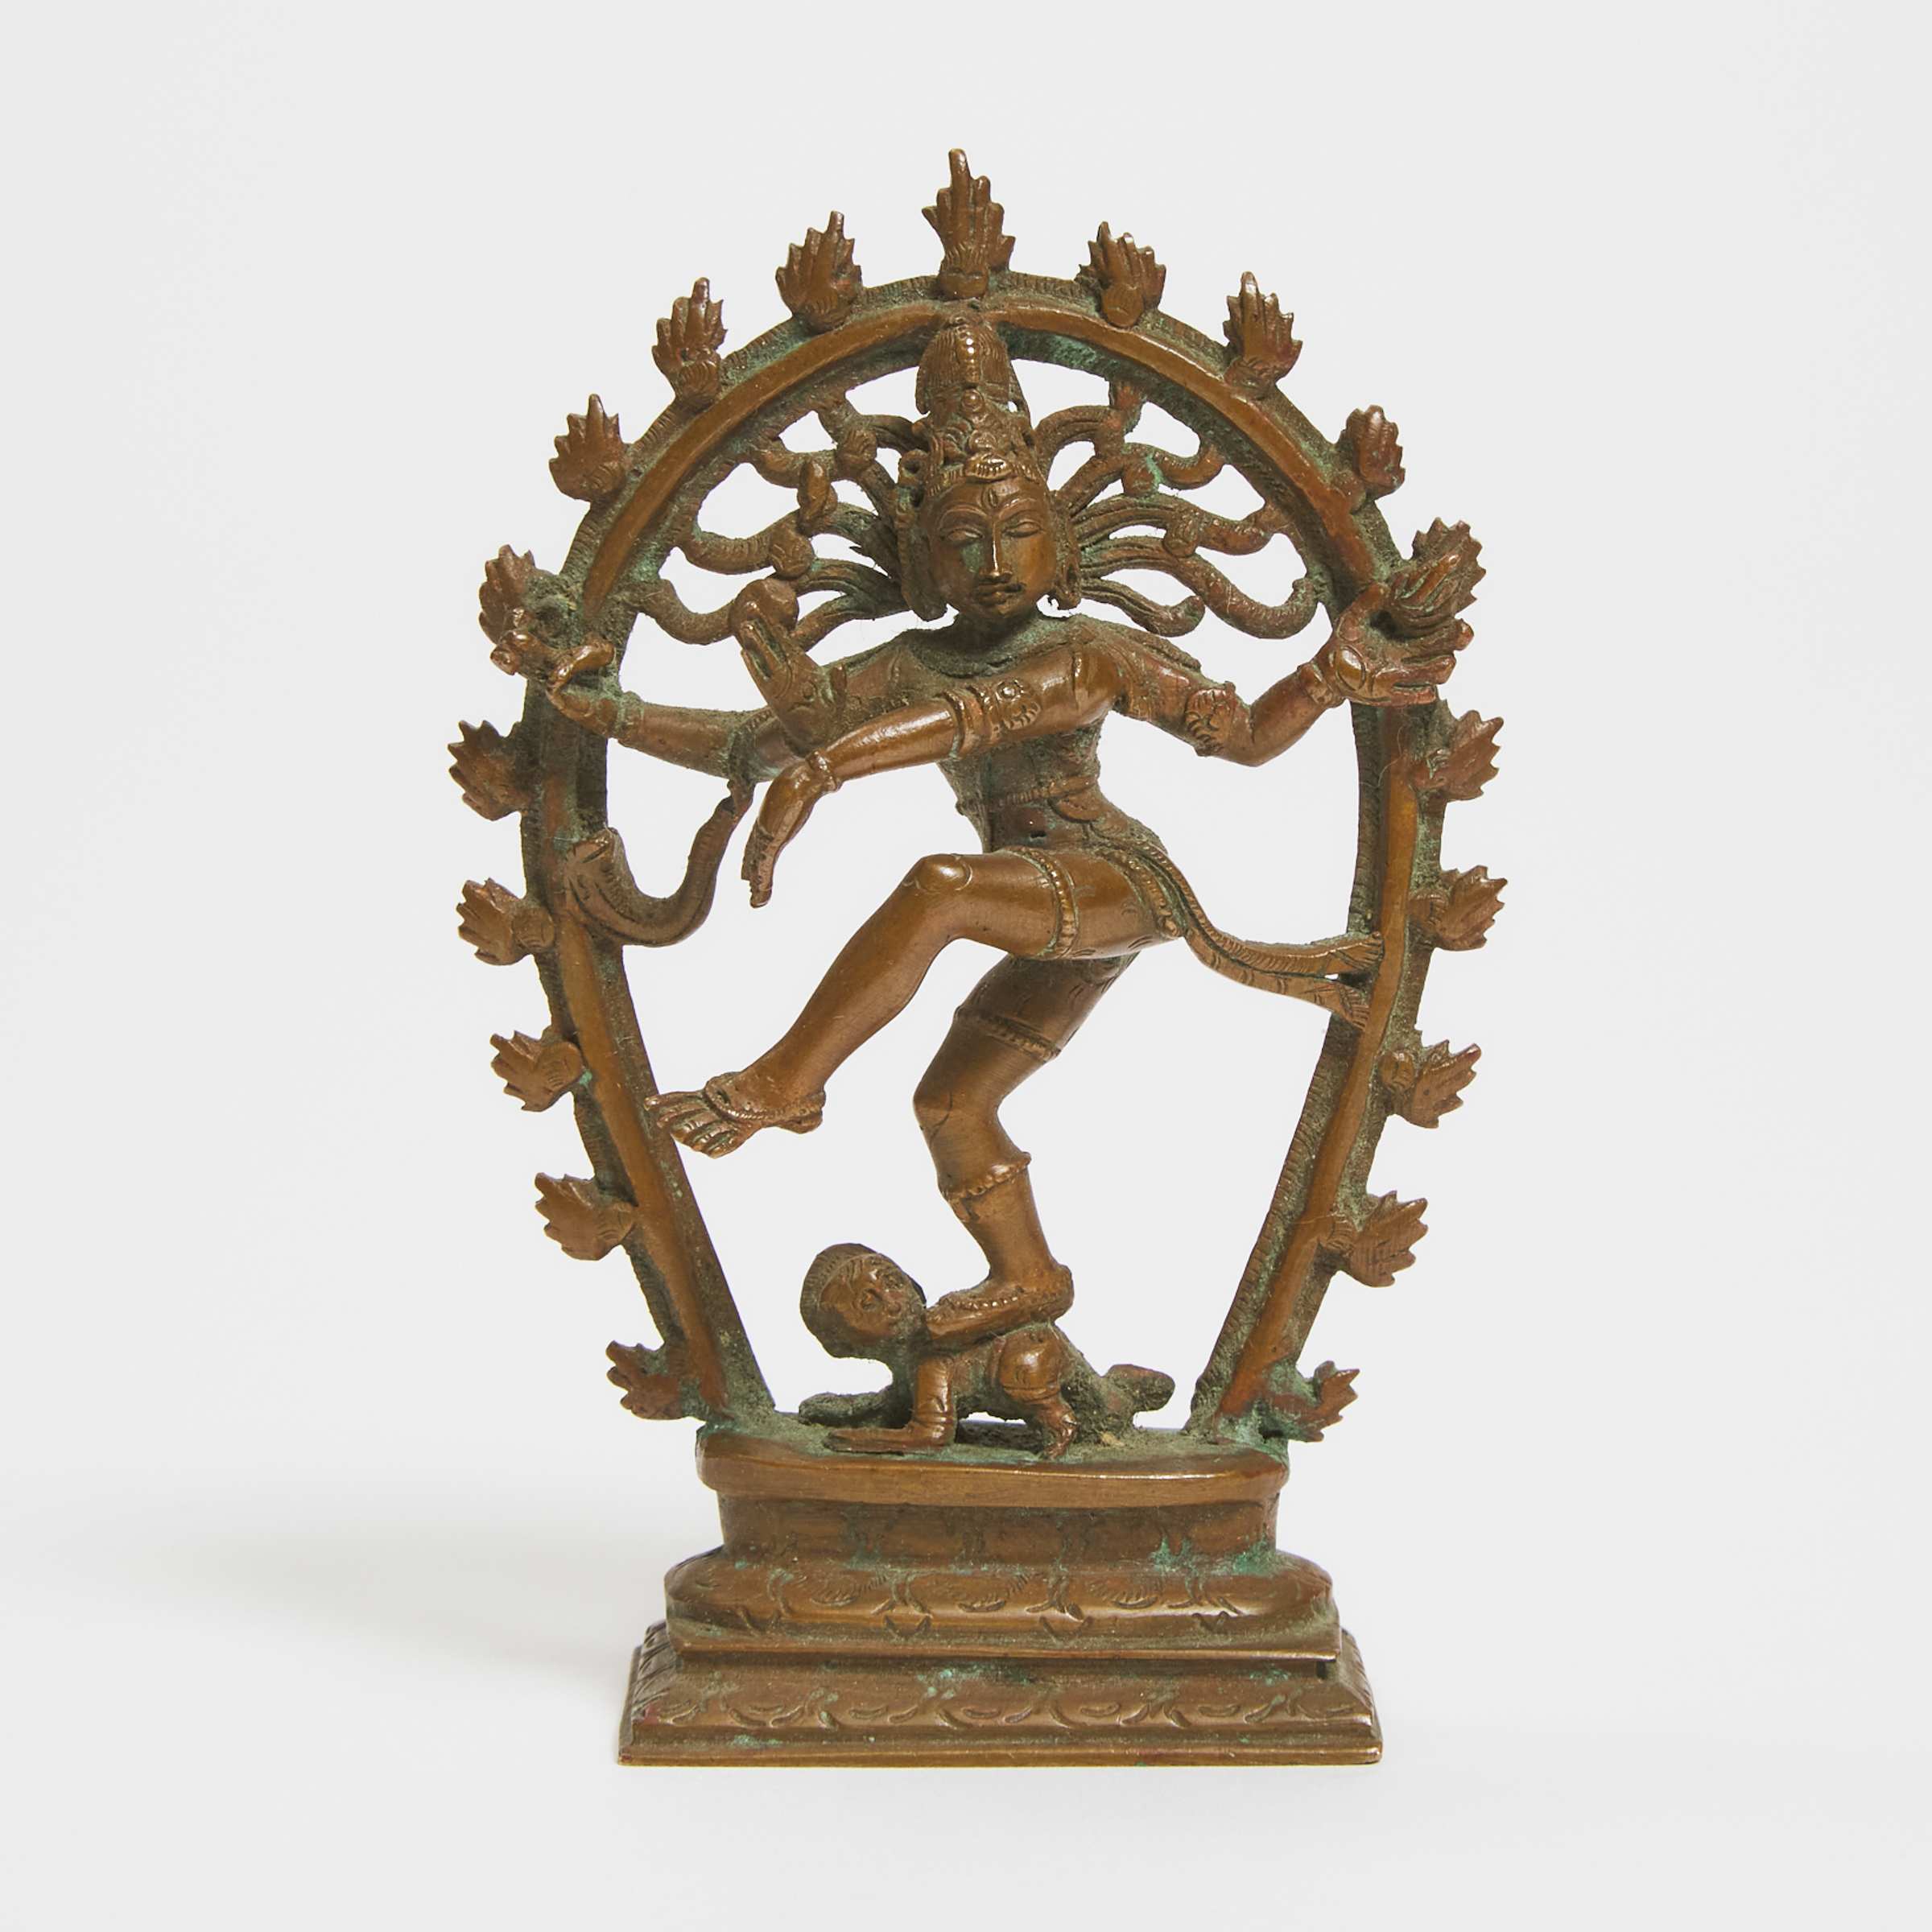 A Small Copper Figure of Shiva Nataraja, South India, 18th Century